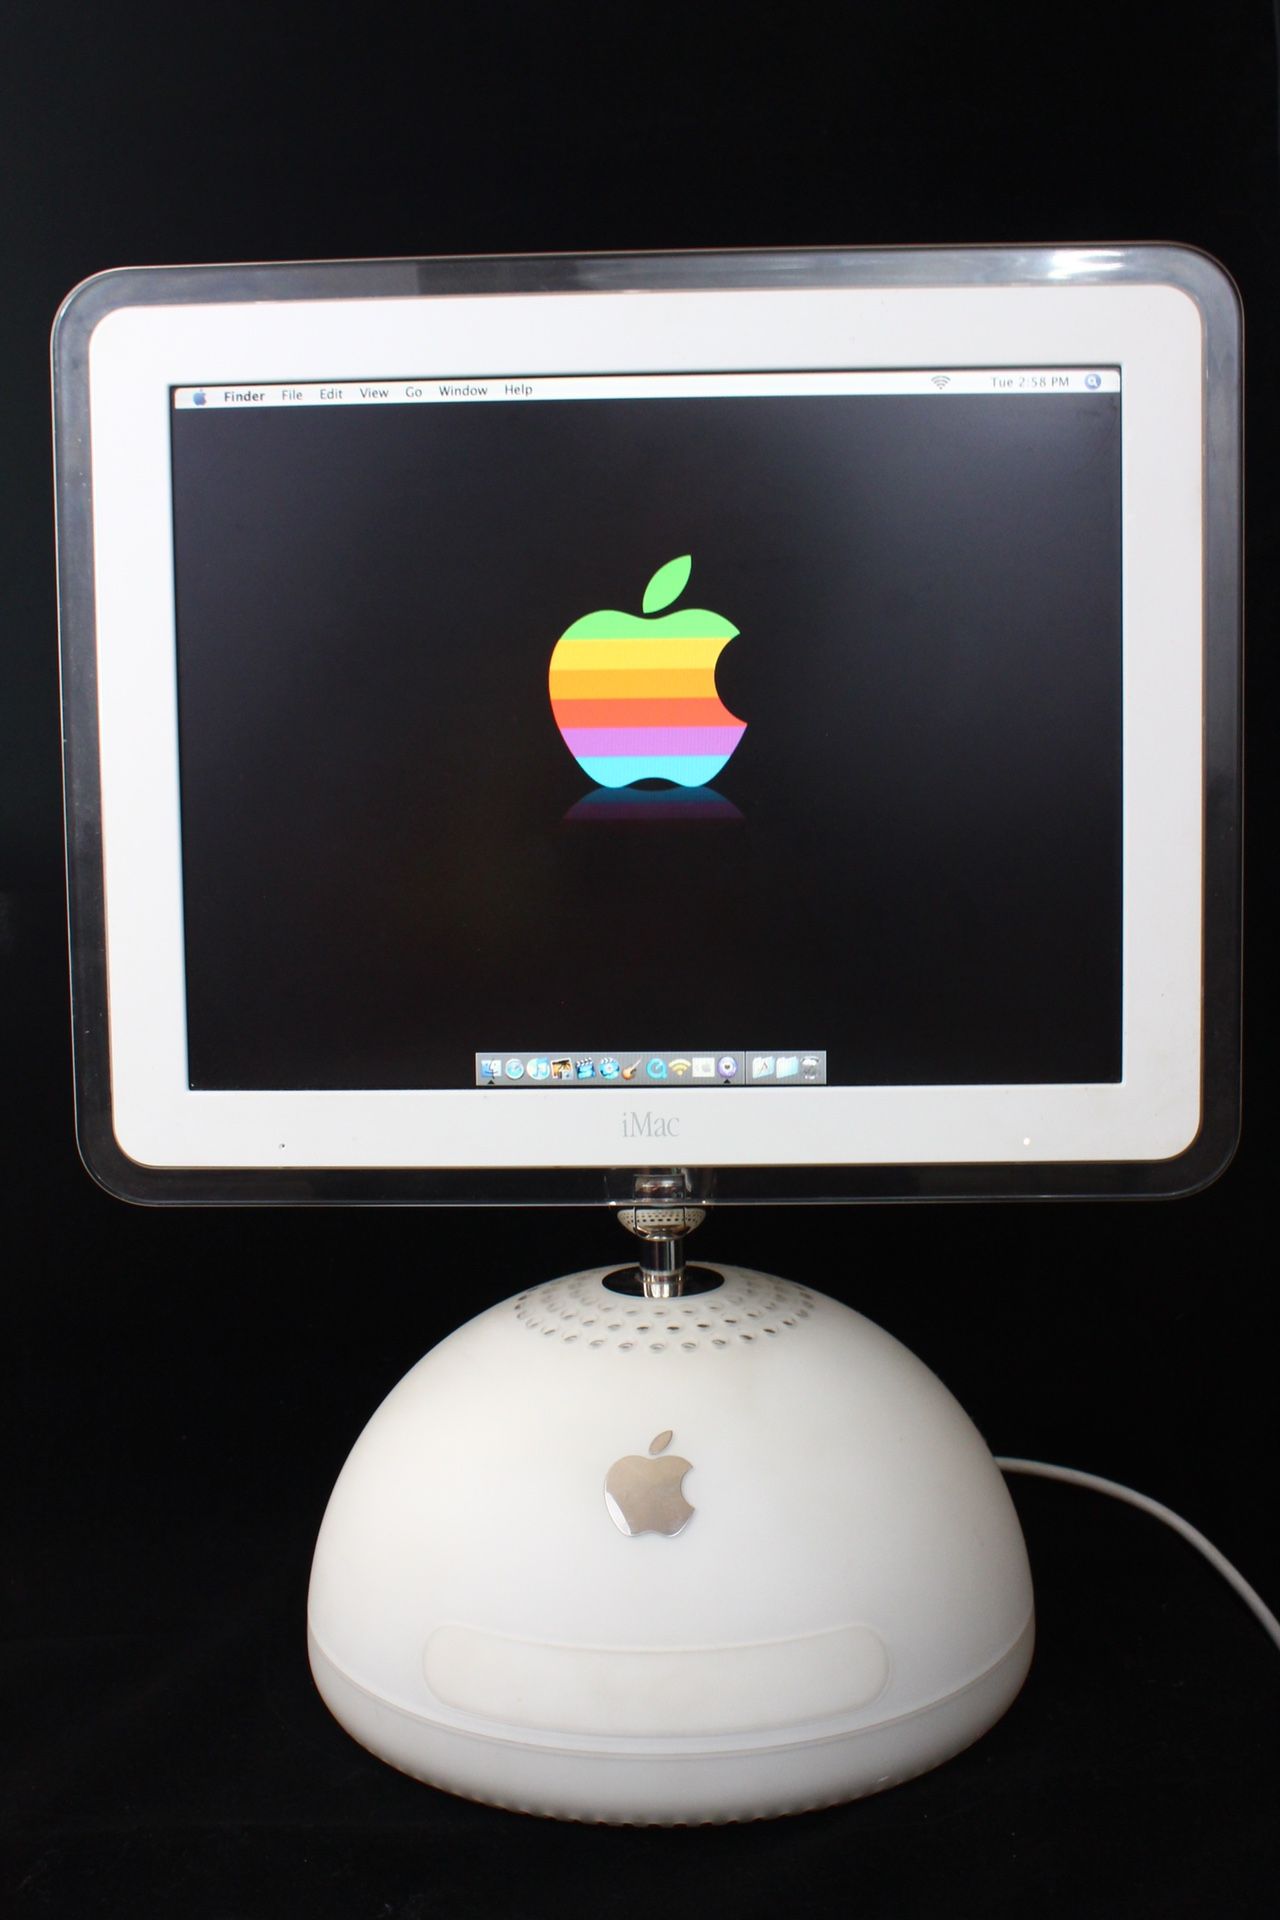 Apple iMac G4 Computer